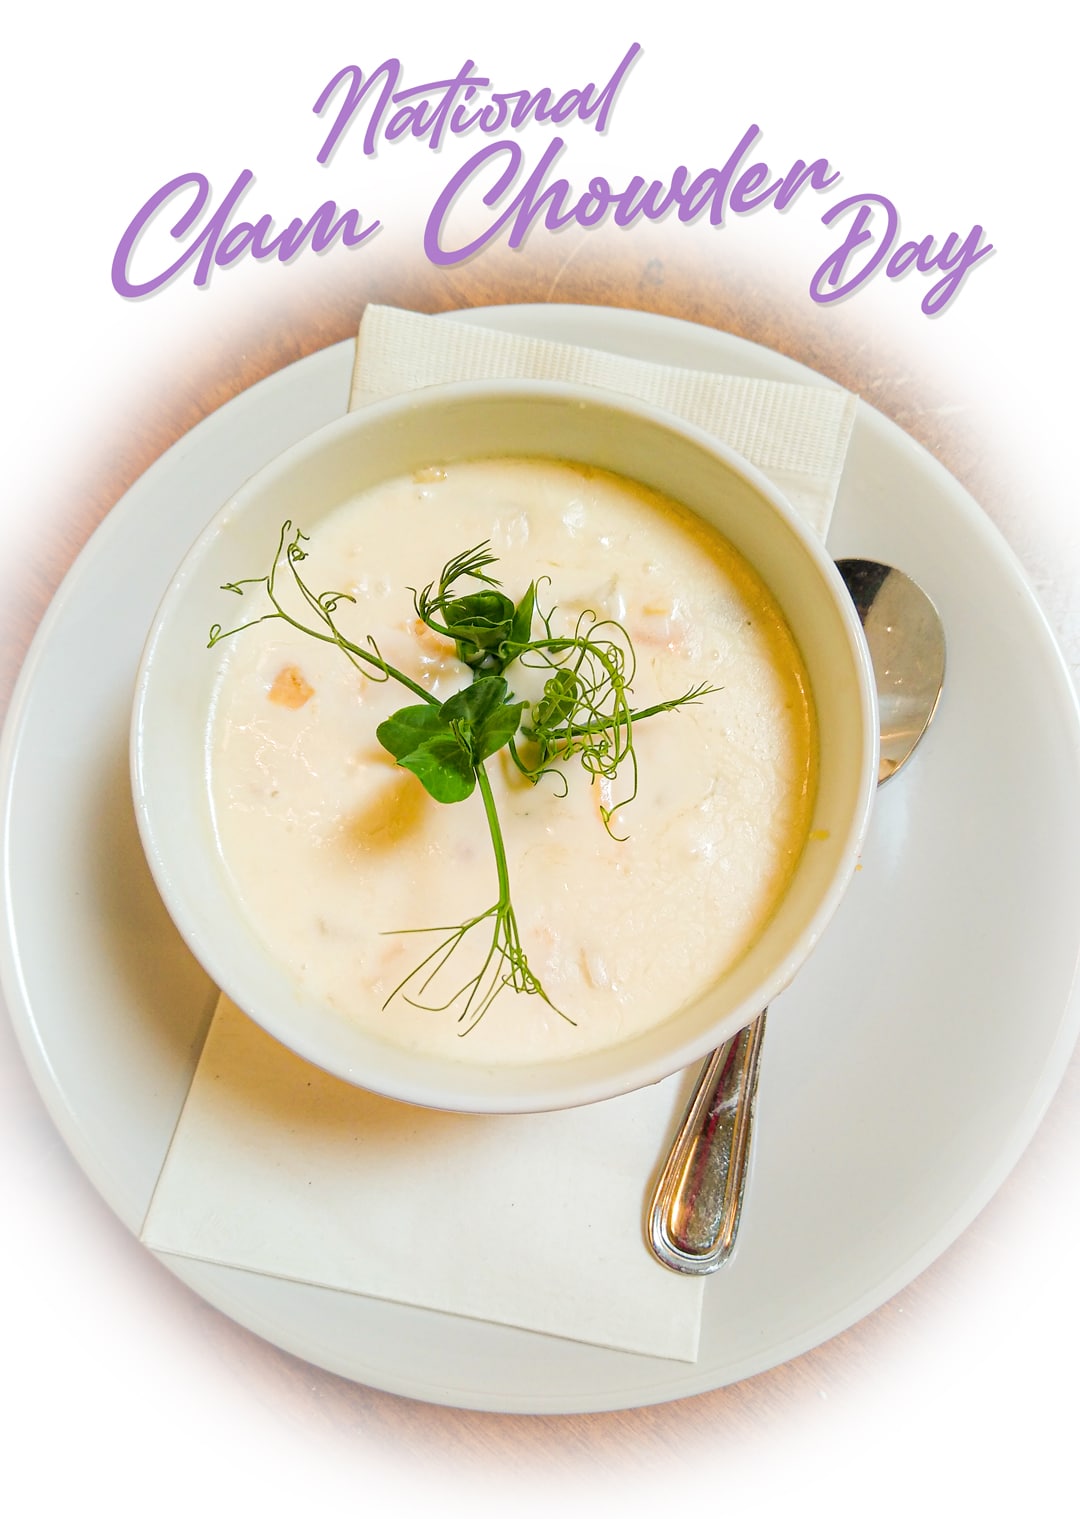 Celebrate National Clam Chowder Day with Café Carmel on February 25